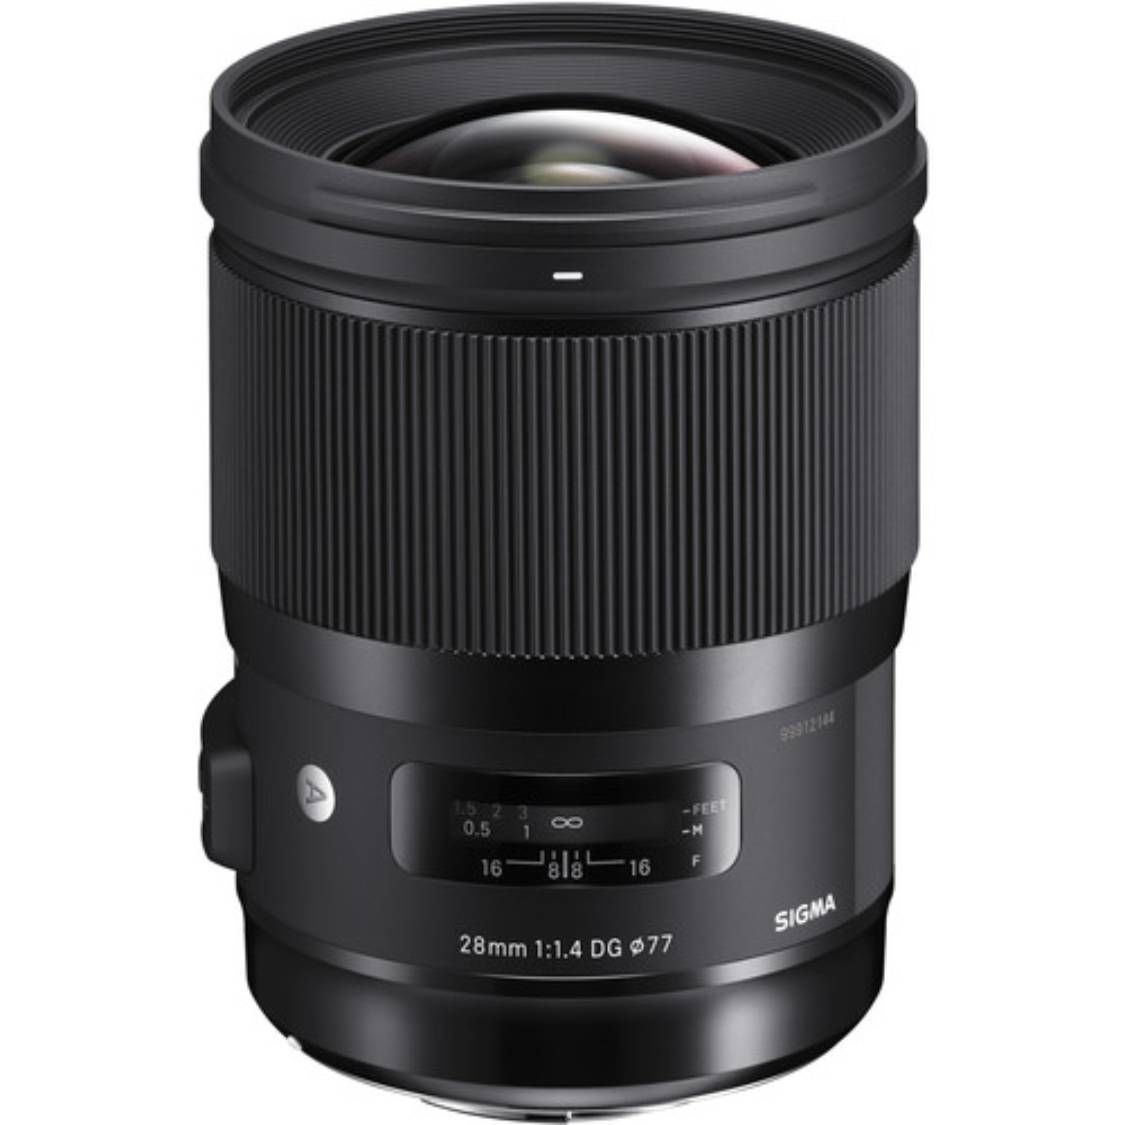 Sigma 28mm f1.4 DG HSM Art Lens (L-mount)